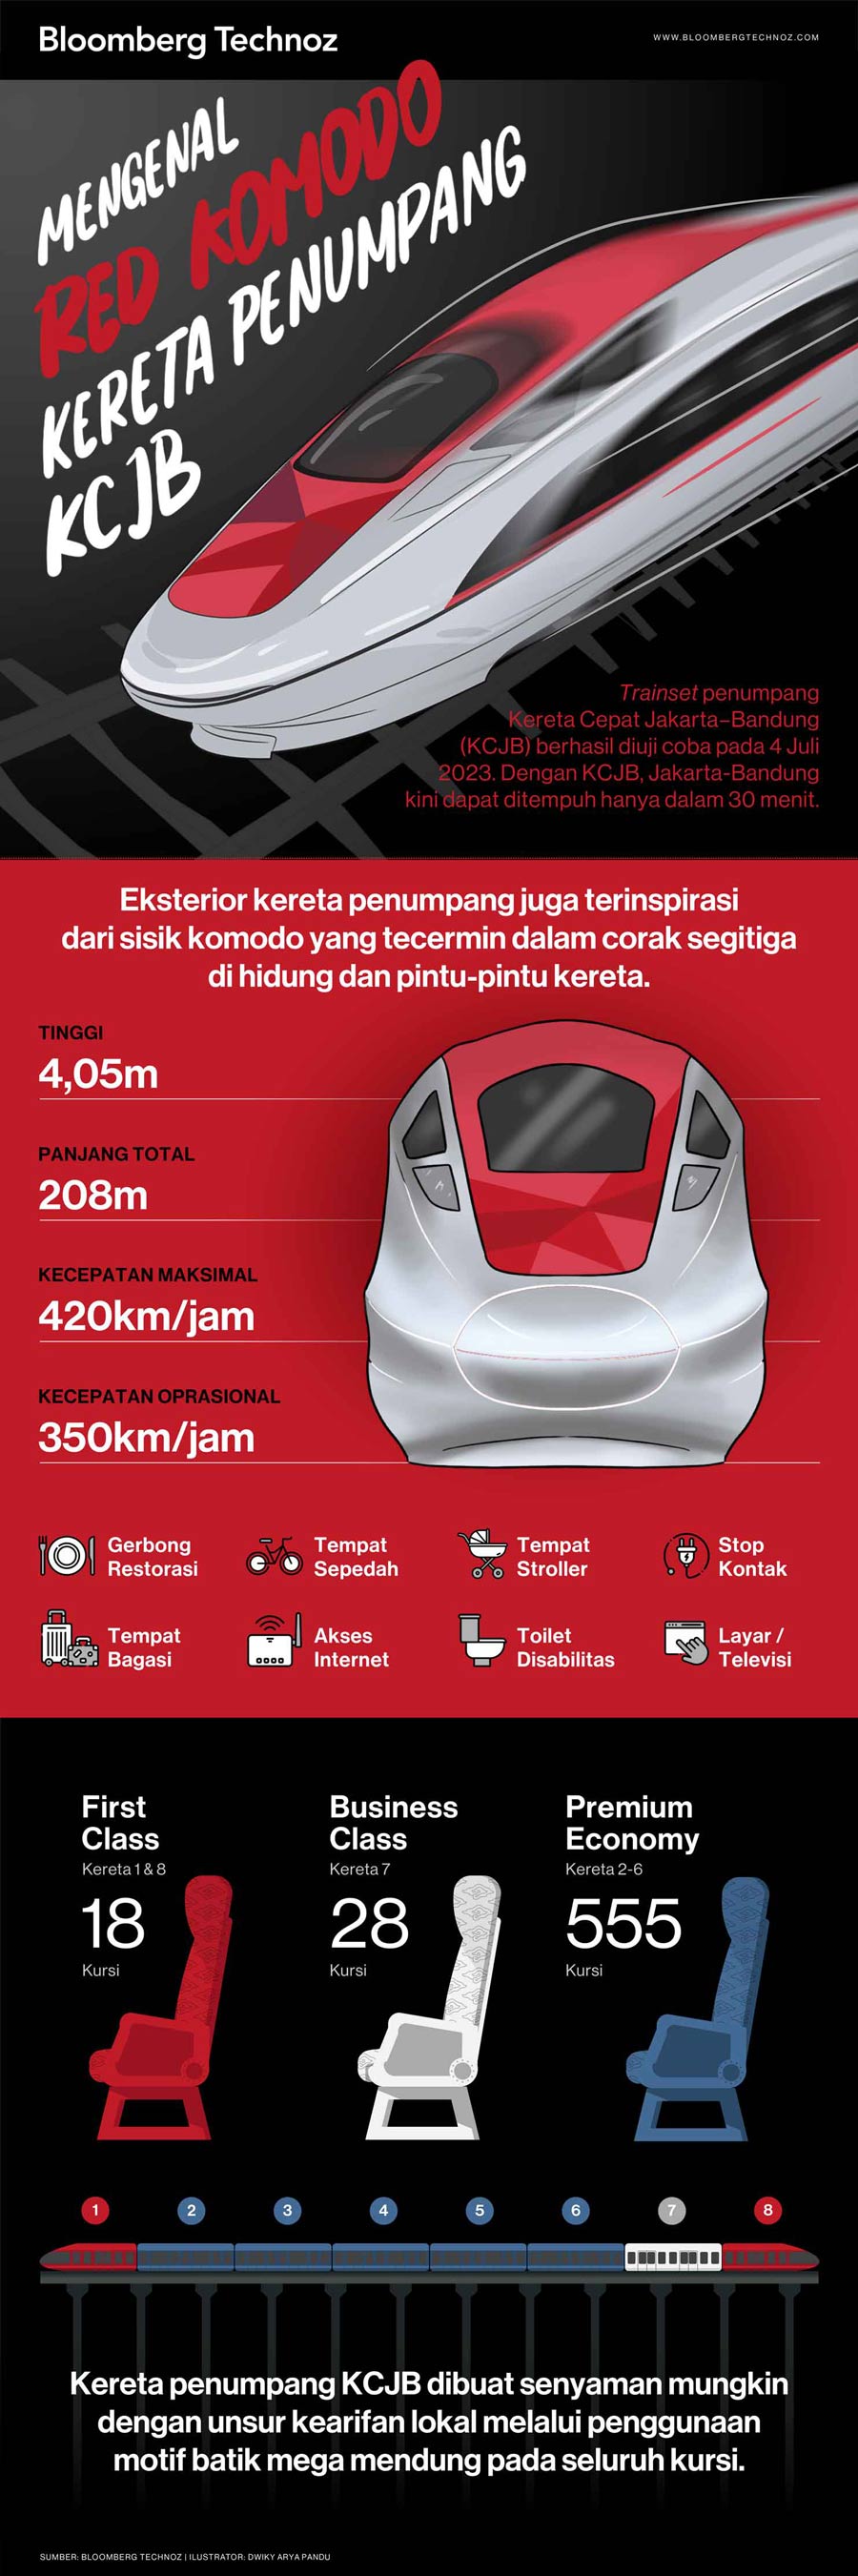 Melihat Spesifikasi Kereta Cepat Jakarta-Bandung Red Komodo (Infografis/Bloomberg Technoz)